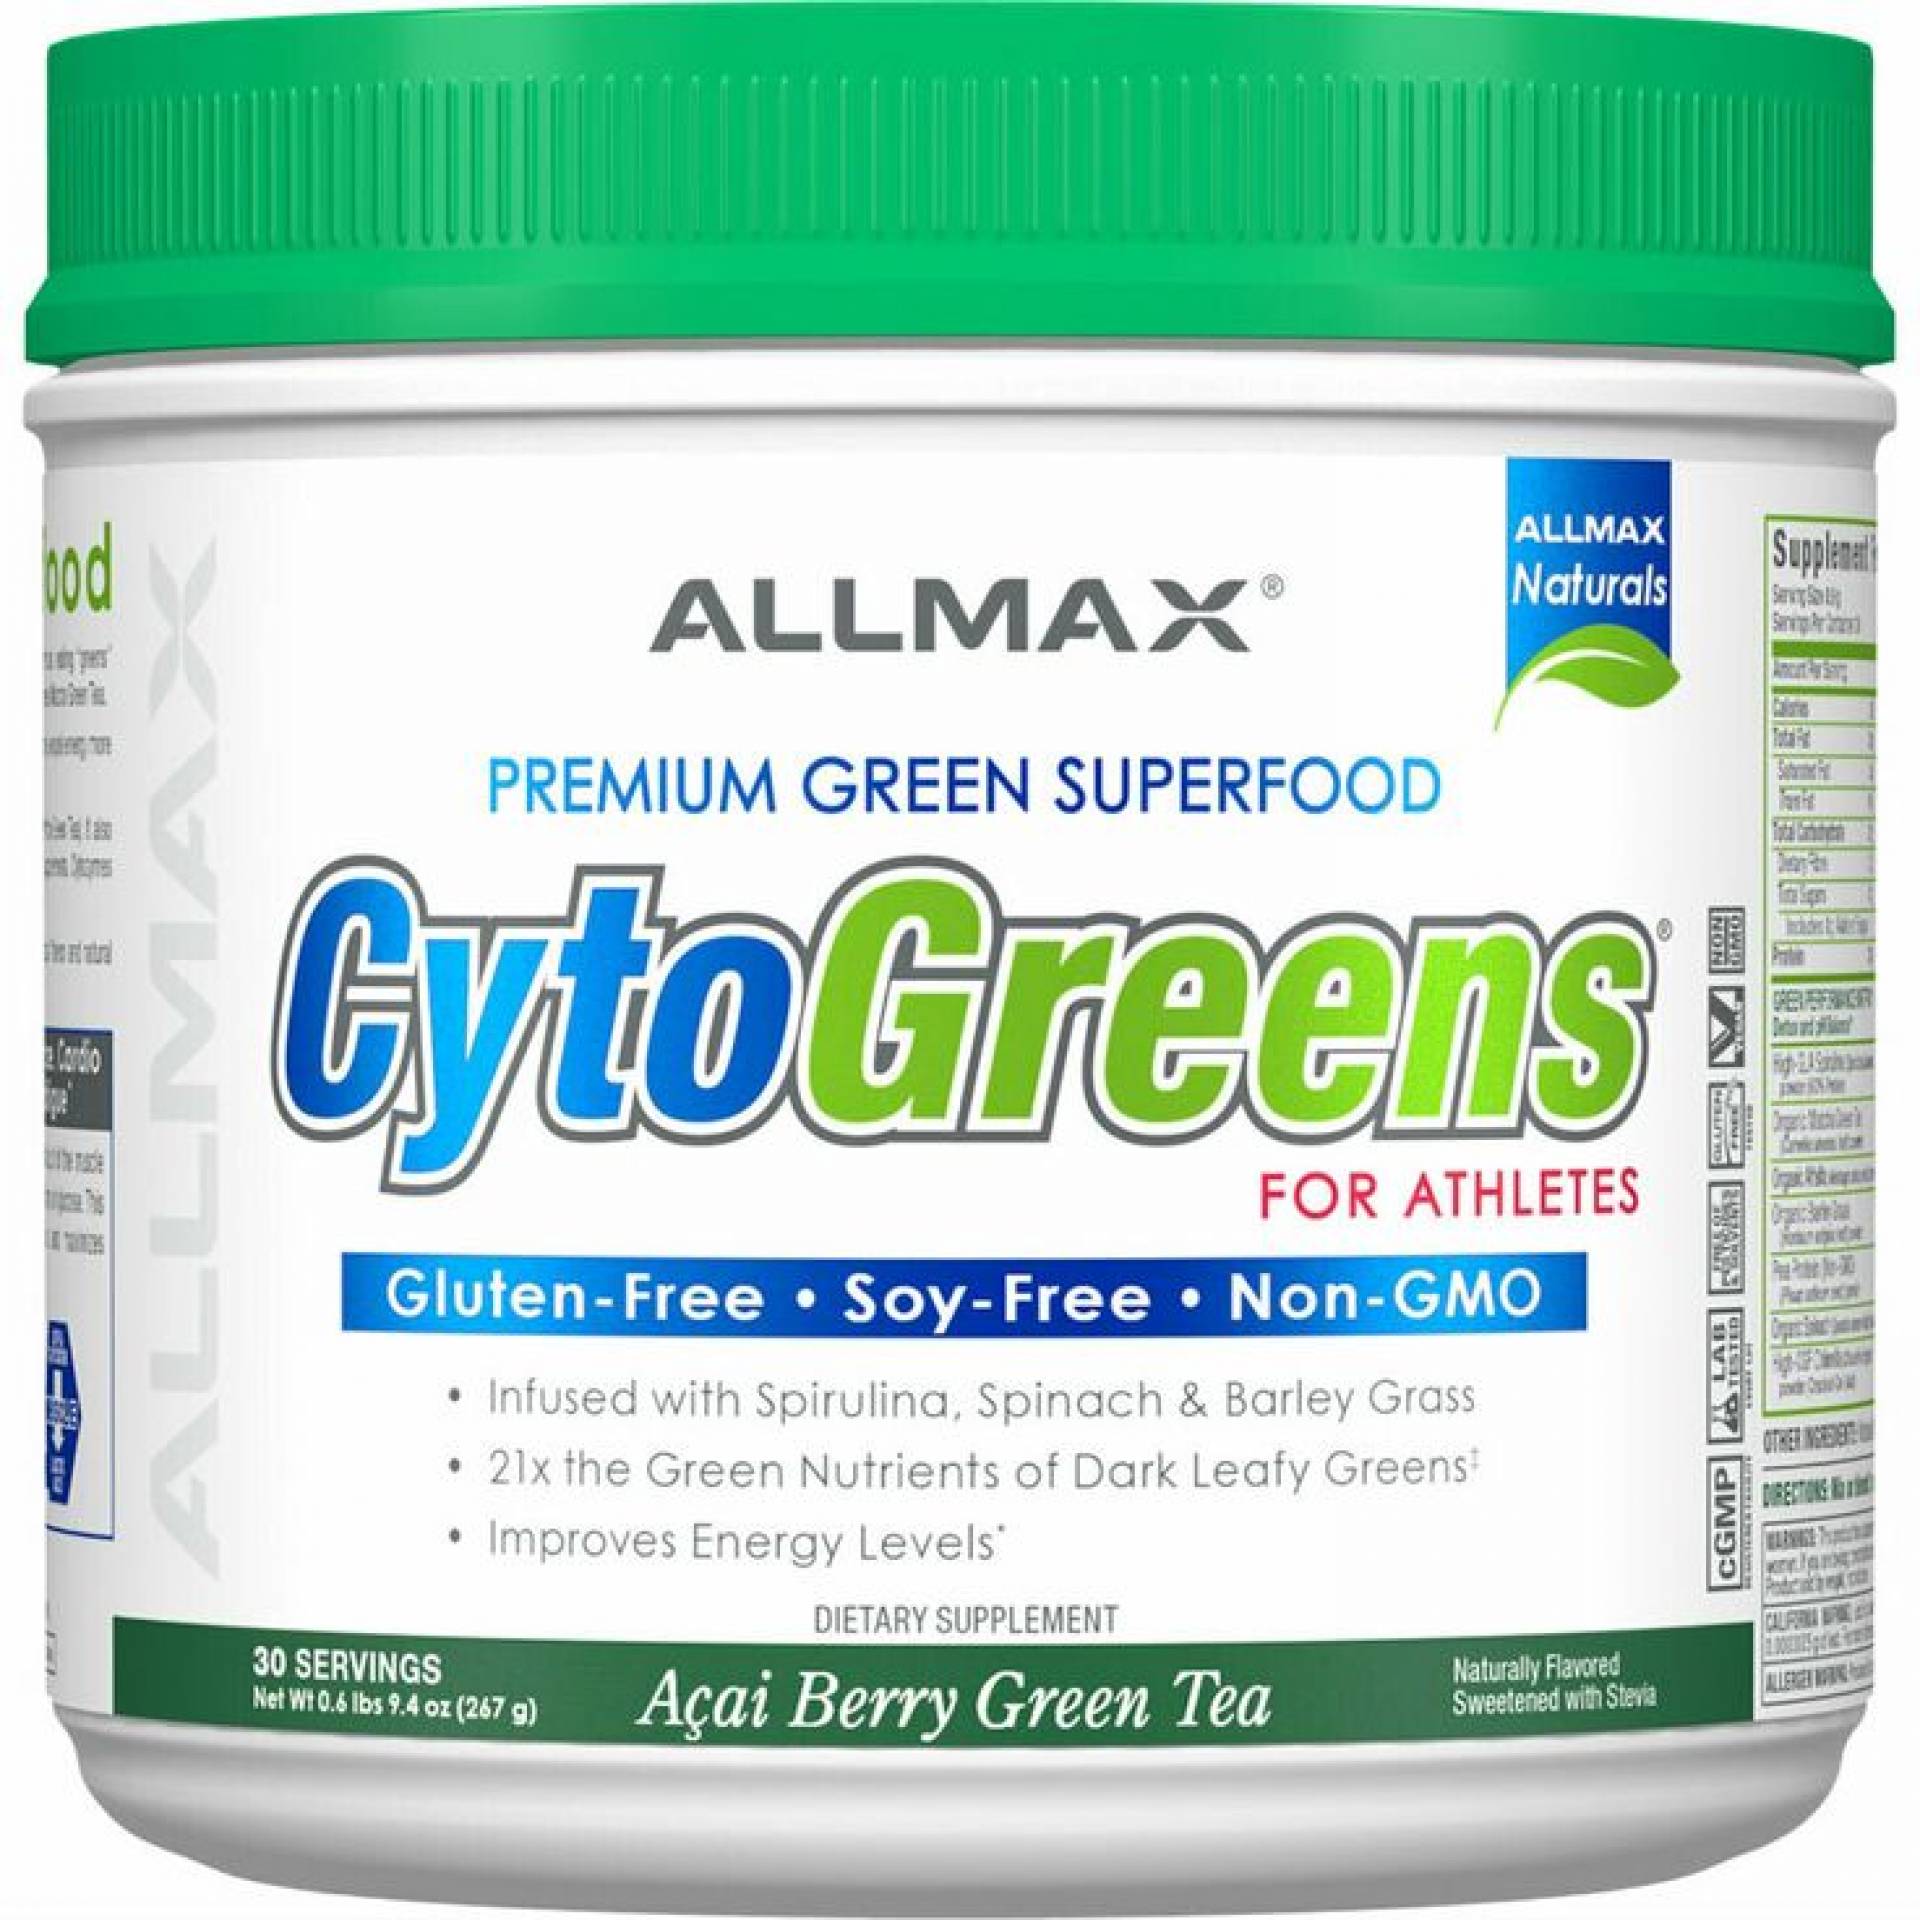 Allmax Cytogreens - $36.99